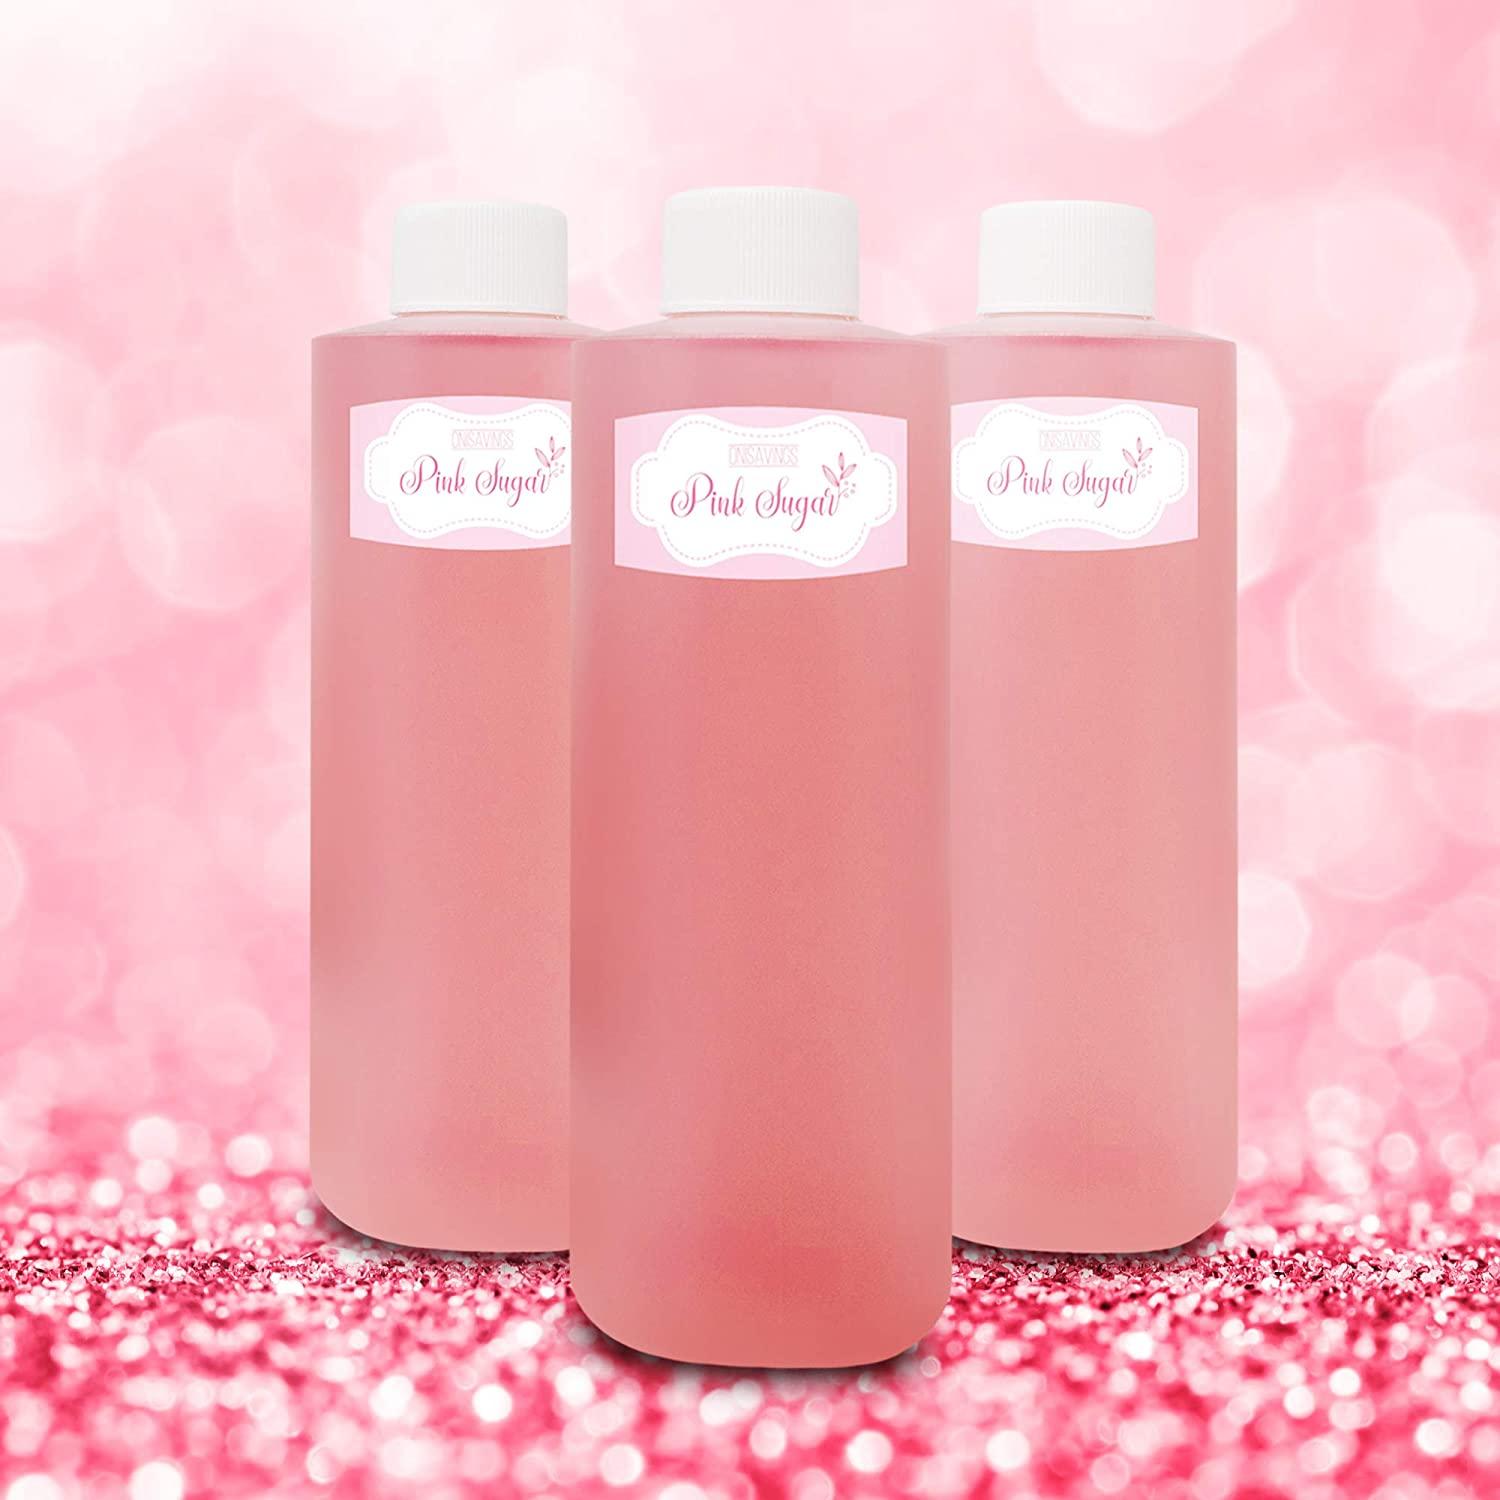 Pink Sugar 10ml. / .033 fl. oz. Roll-On Perfume I Skin Oil I Our  Interpretation Premium Quality I Uncut I Fragrance Oil I Skin Safe I Add  Aroma to